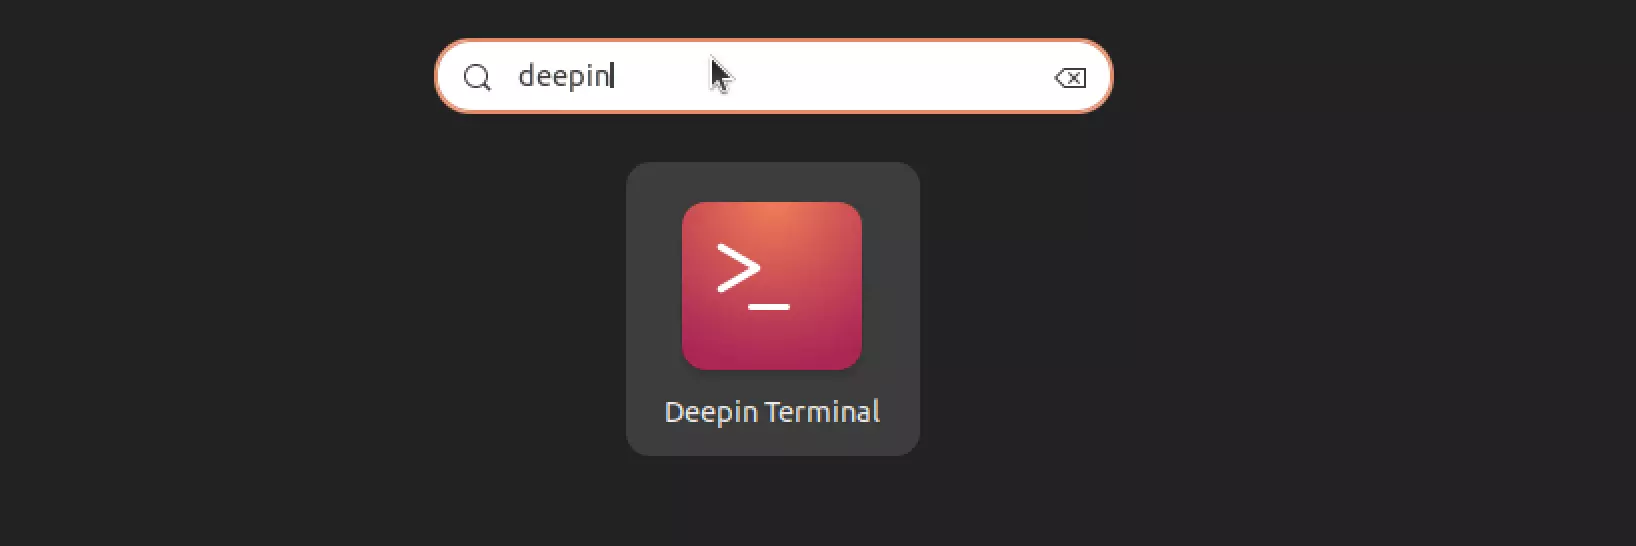 Launch_the_Deepin_Terminal_Emulator